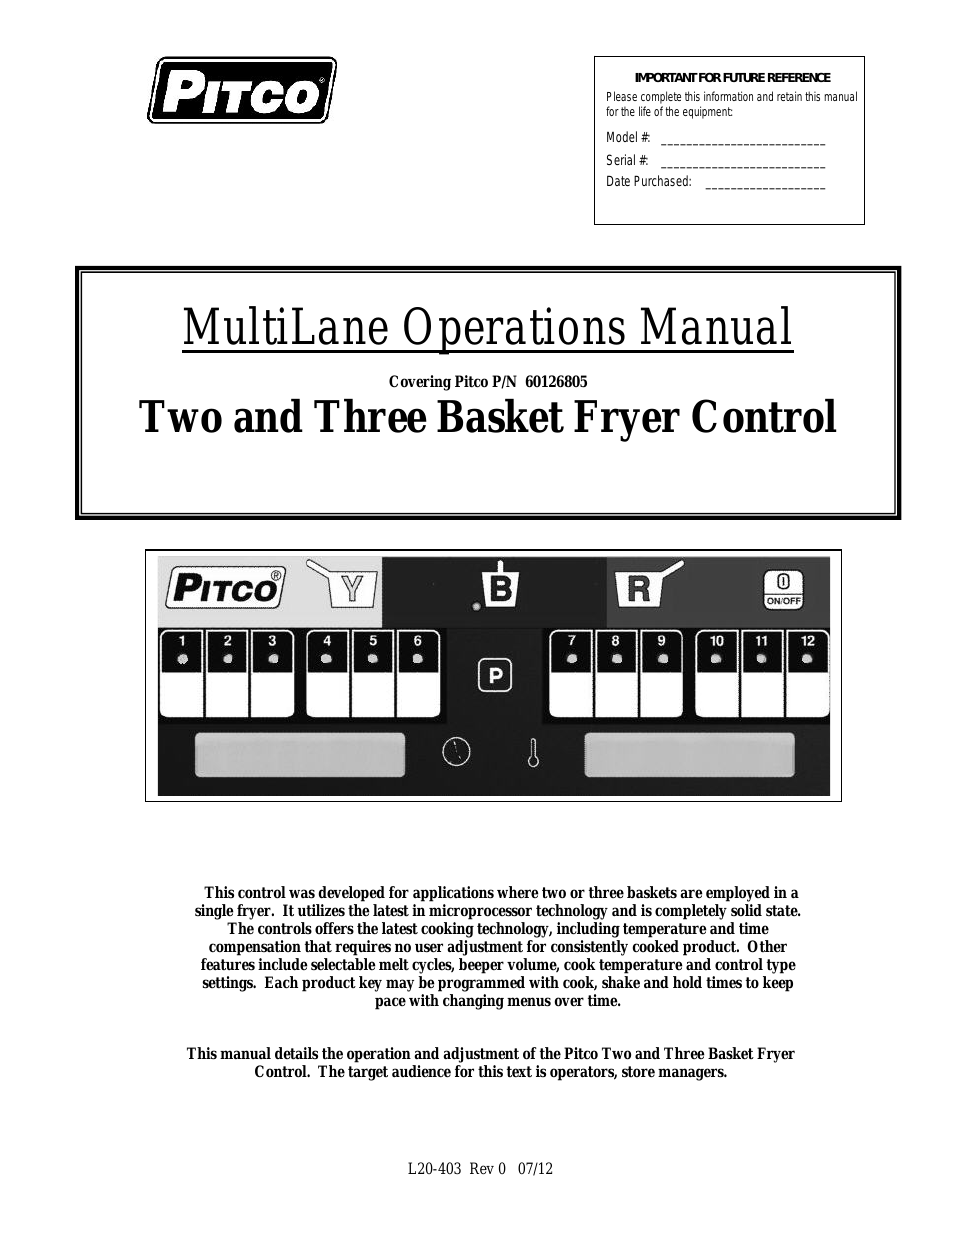 Multilane Three Basket Fryer Control